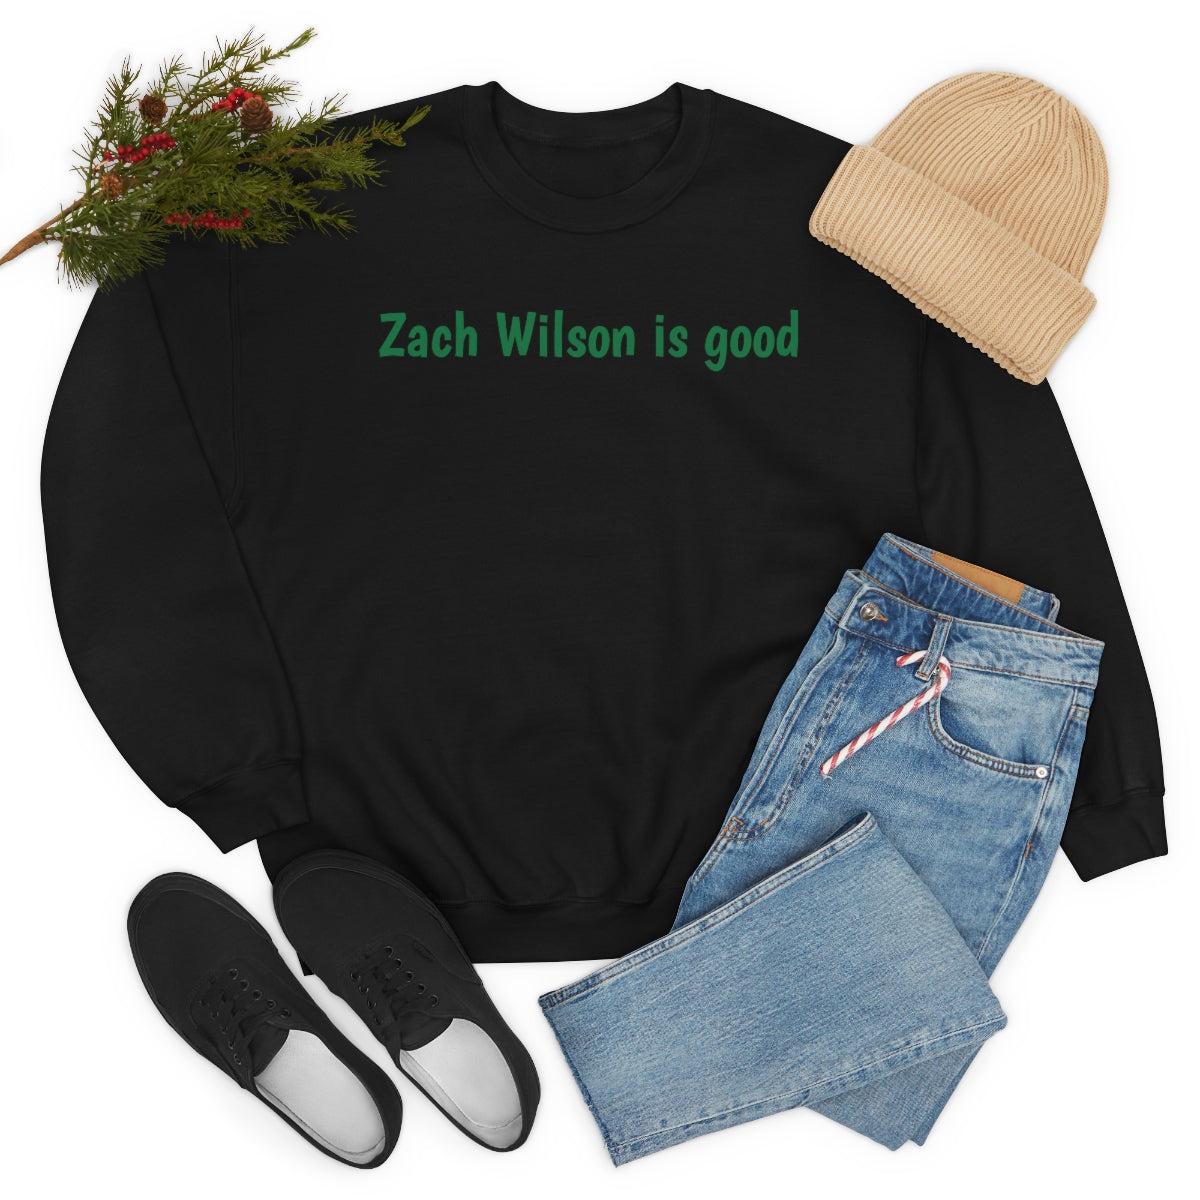 Zach Wilson is good Crewneck Sweatshirt - IsGoodBrand